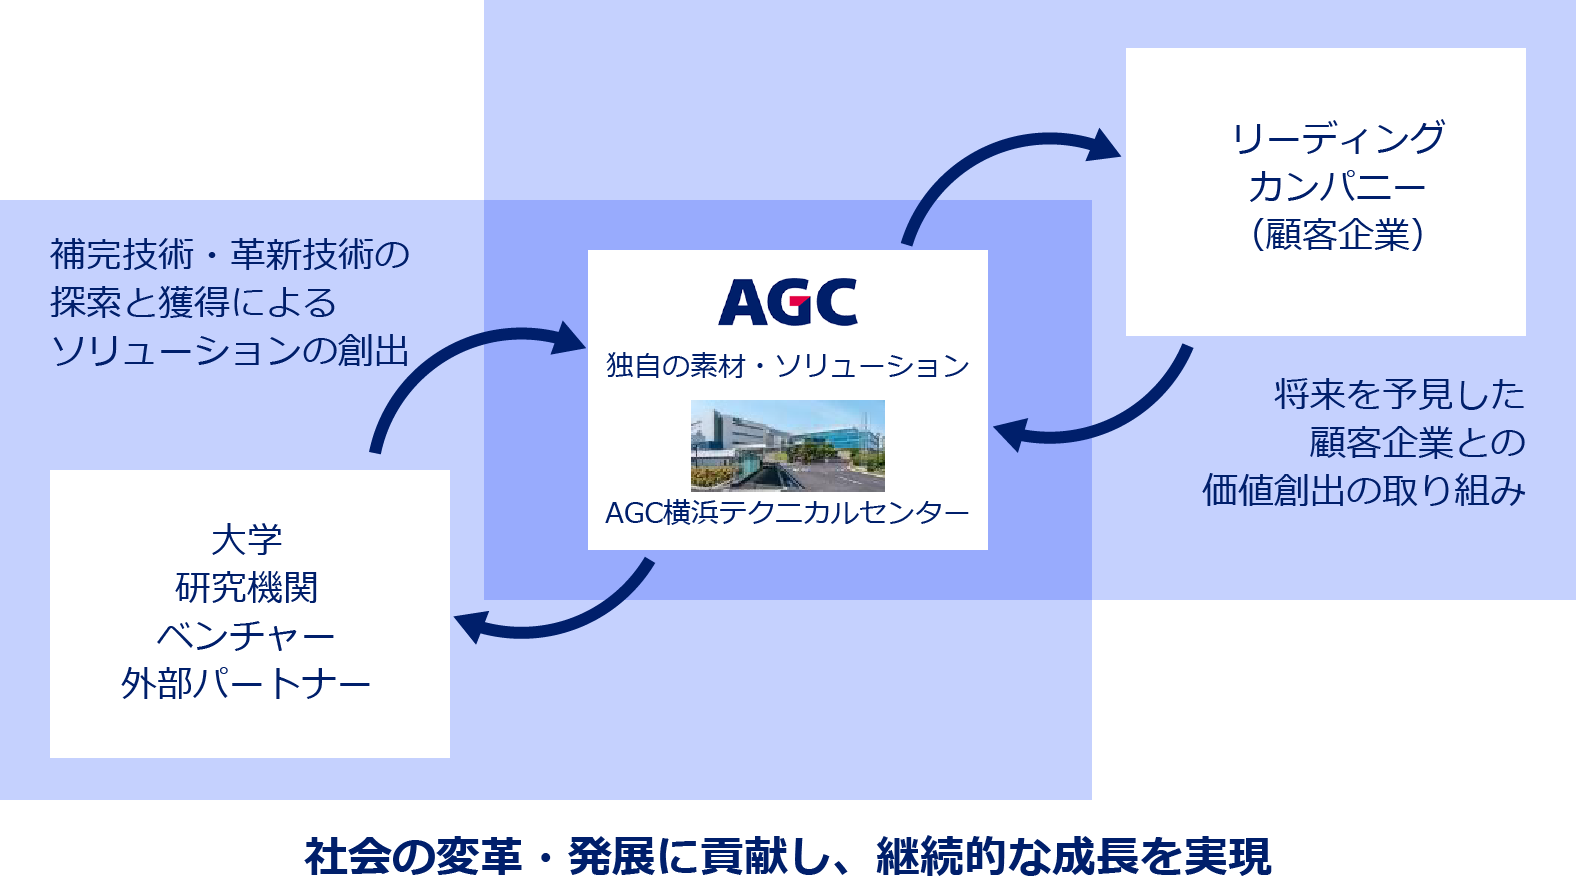 AGCグループの「両利きの経営」